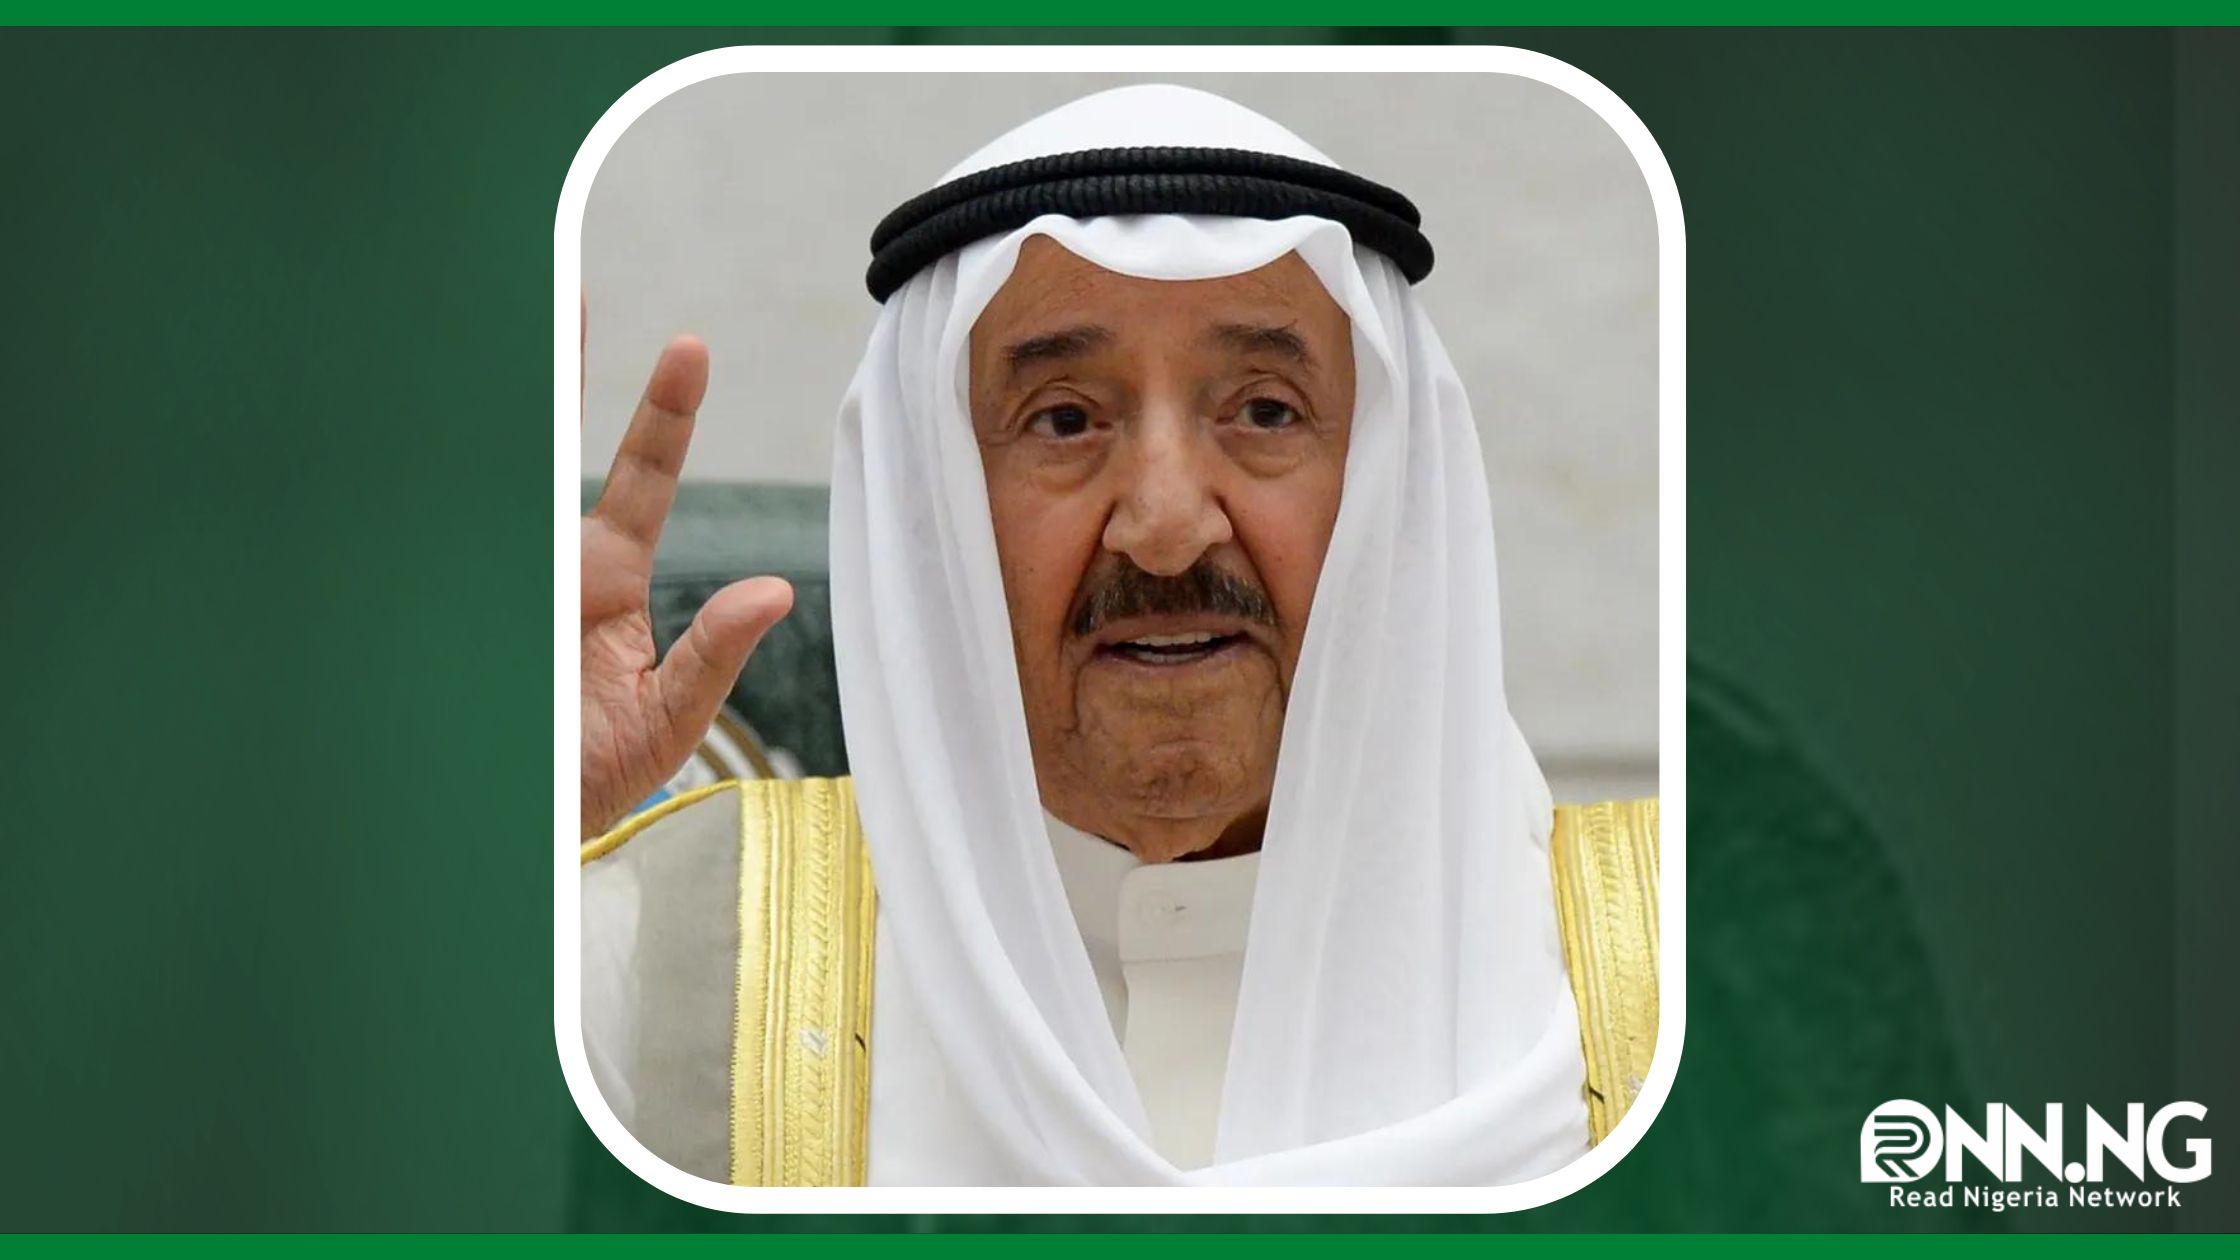 Sheikh Of Kuwait Biography And Net Worth